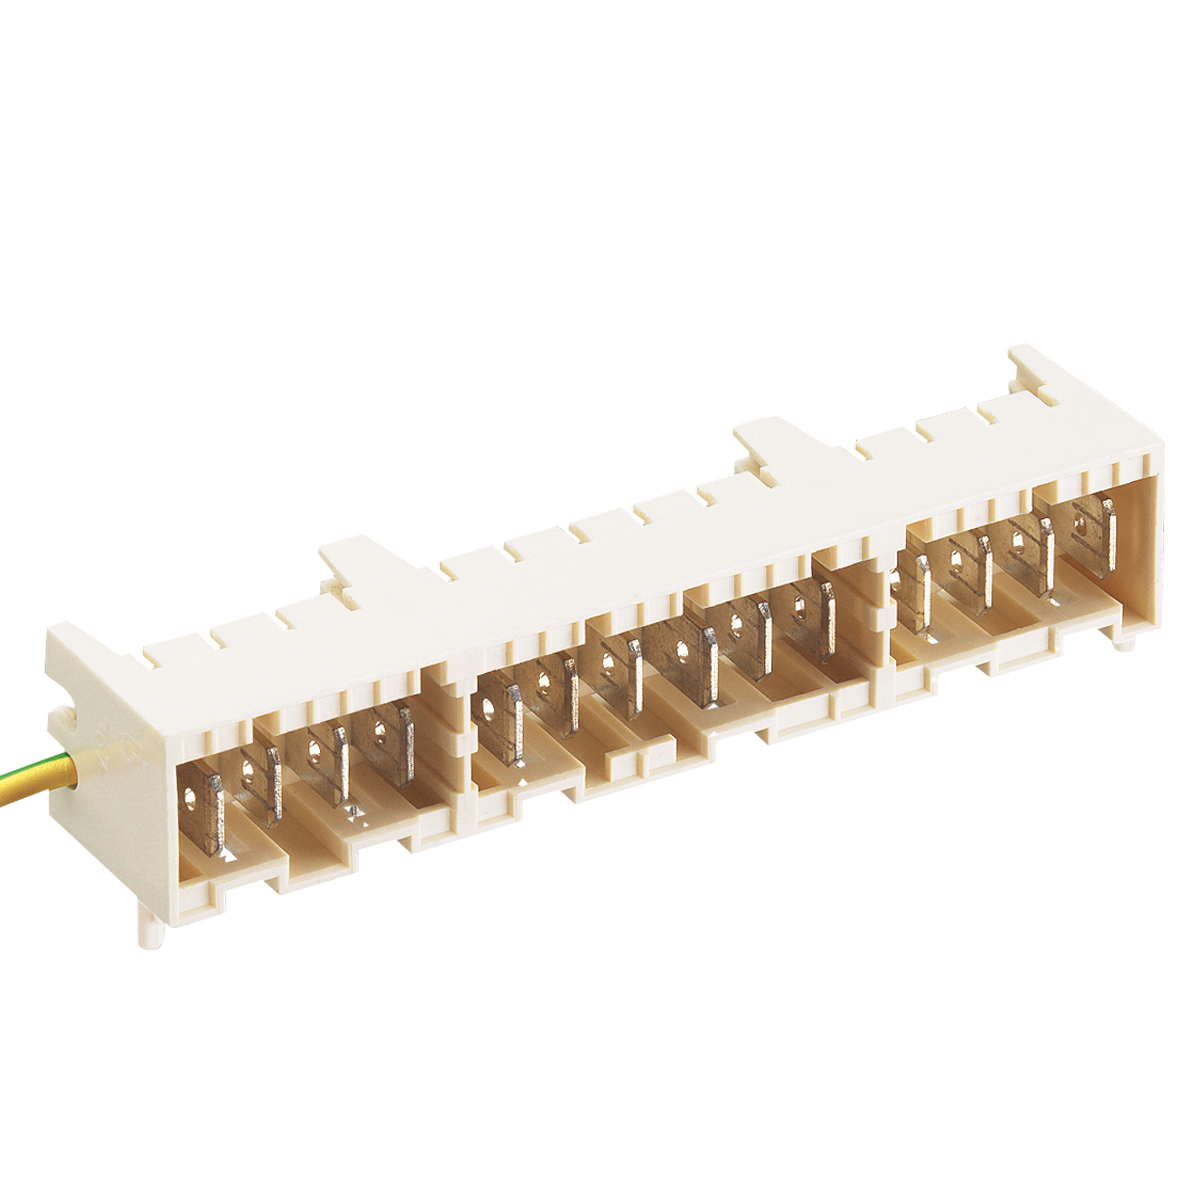 Lumberg: 3679 (Series 36 | RAST 5 connectors, pitch 5.0 mm)